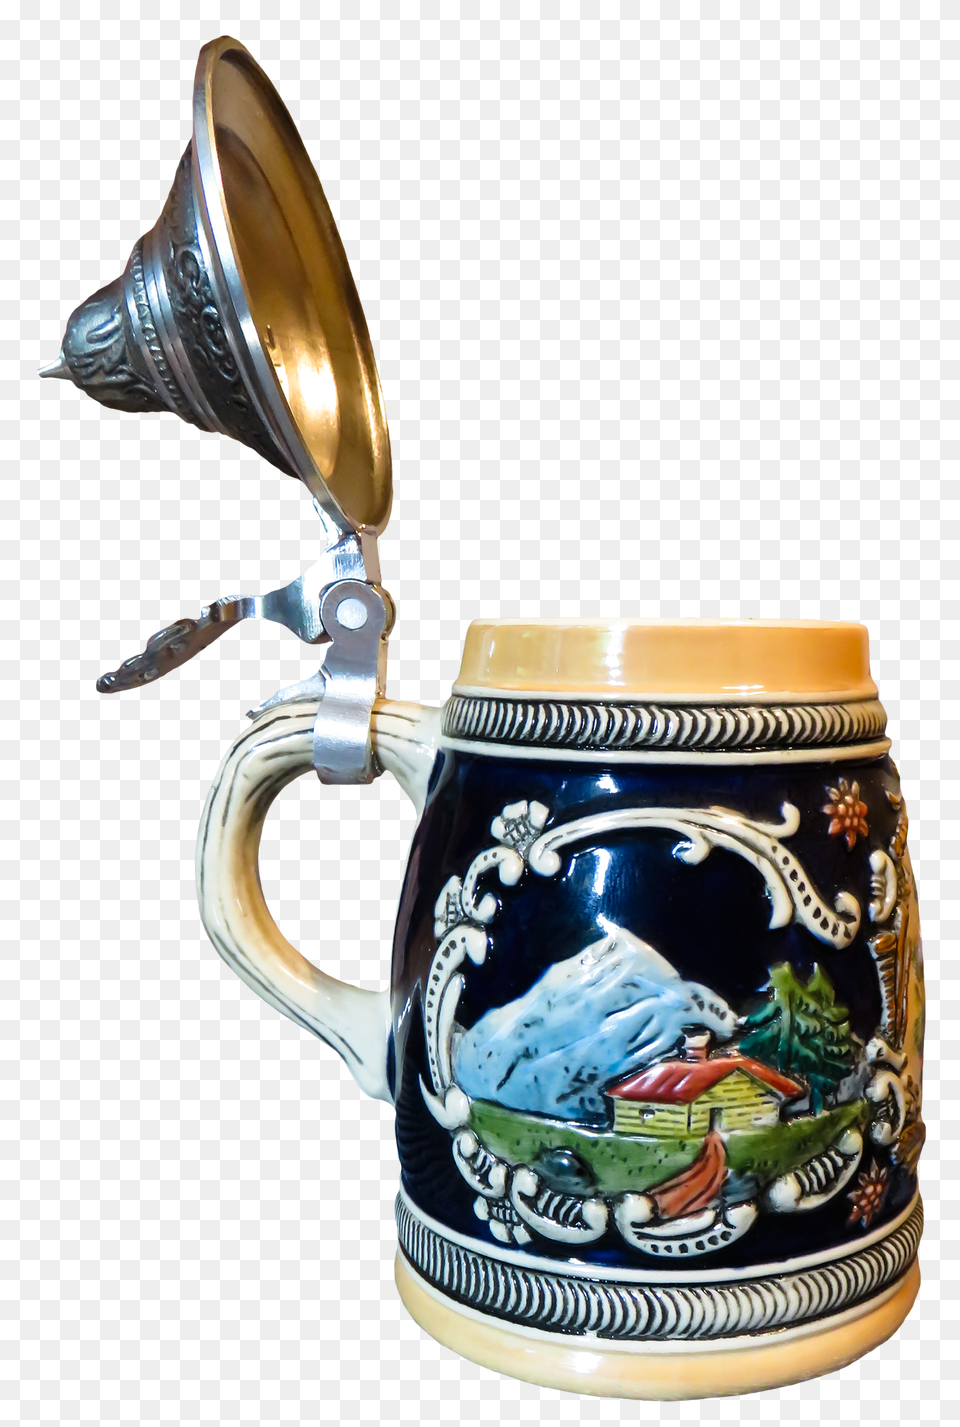 Beer Mug, Cup, Stein, Smoke Pipe Png Image